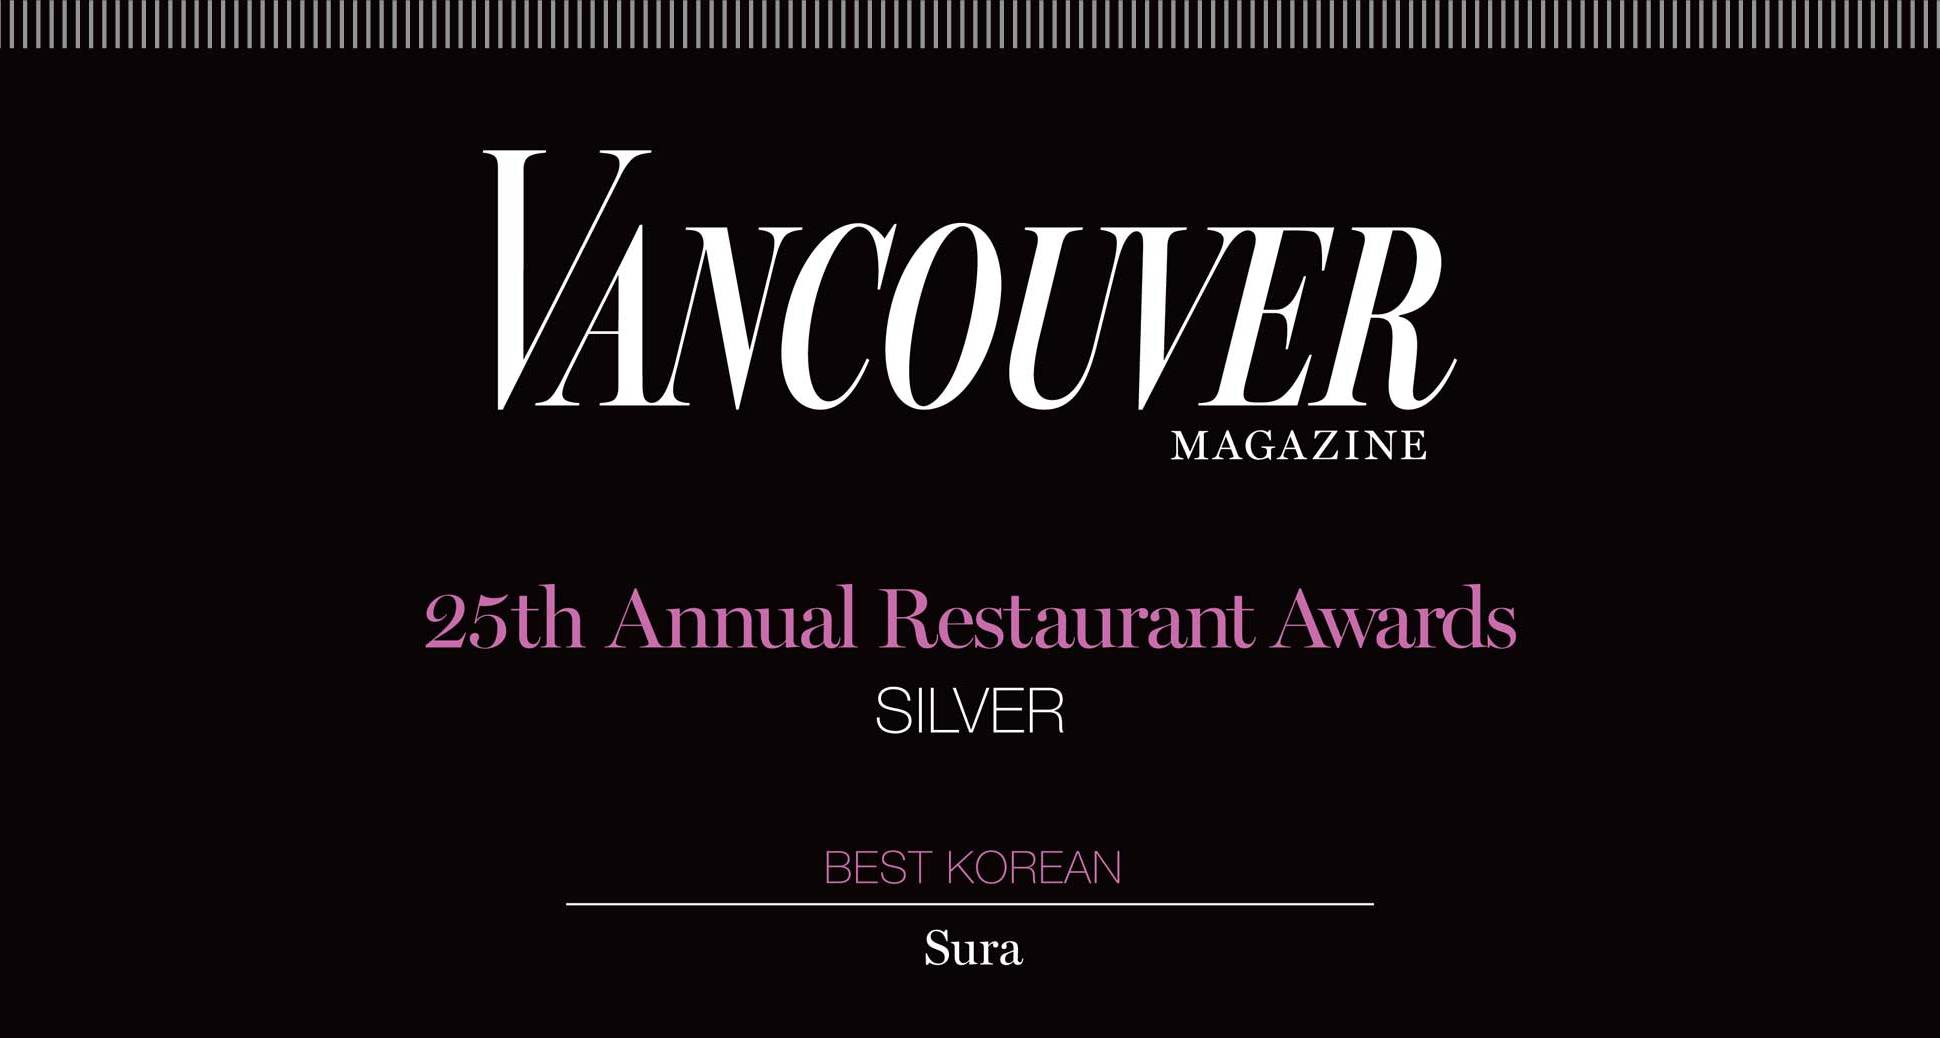 Sura is the best Korean silver winner of Vancouver magazine’s 2014 restaurant awards!